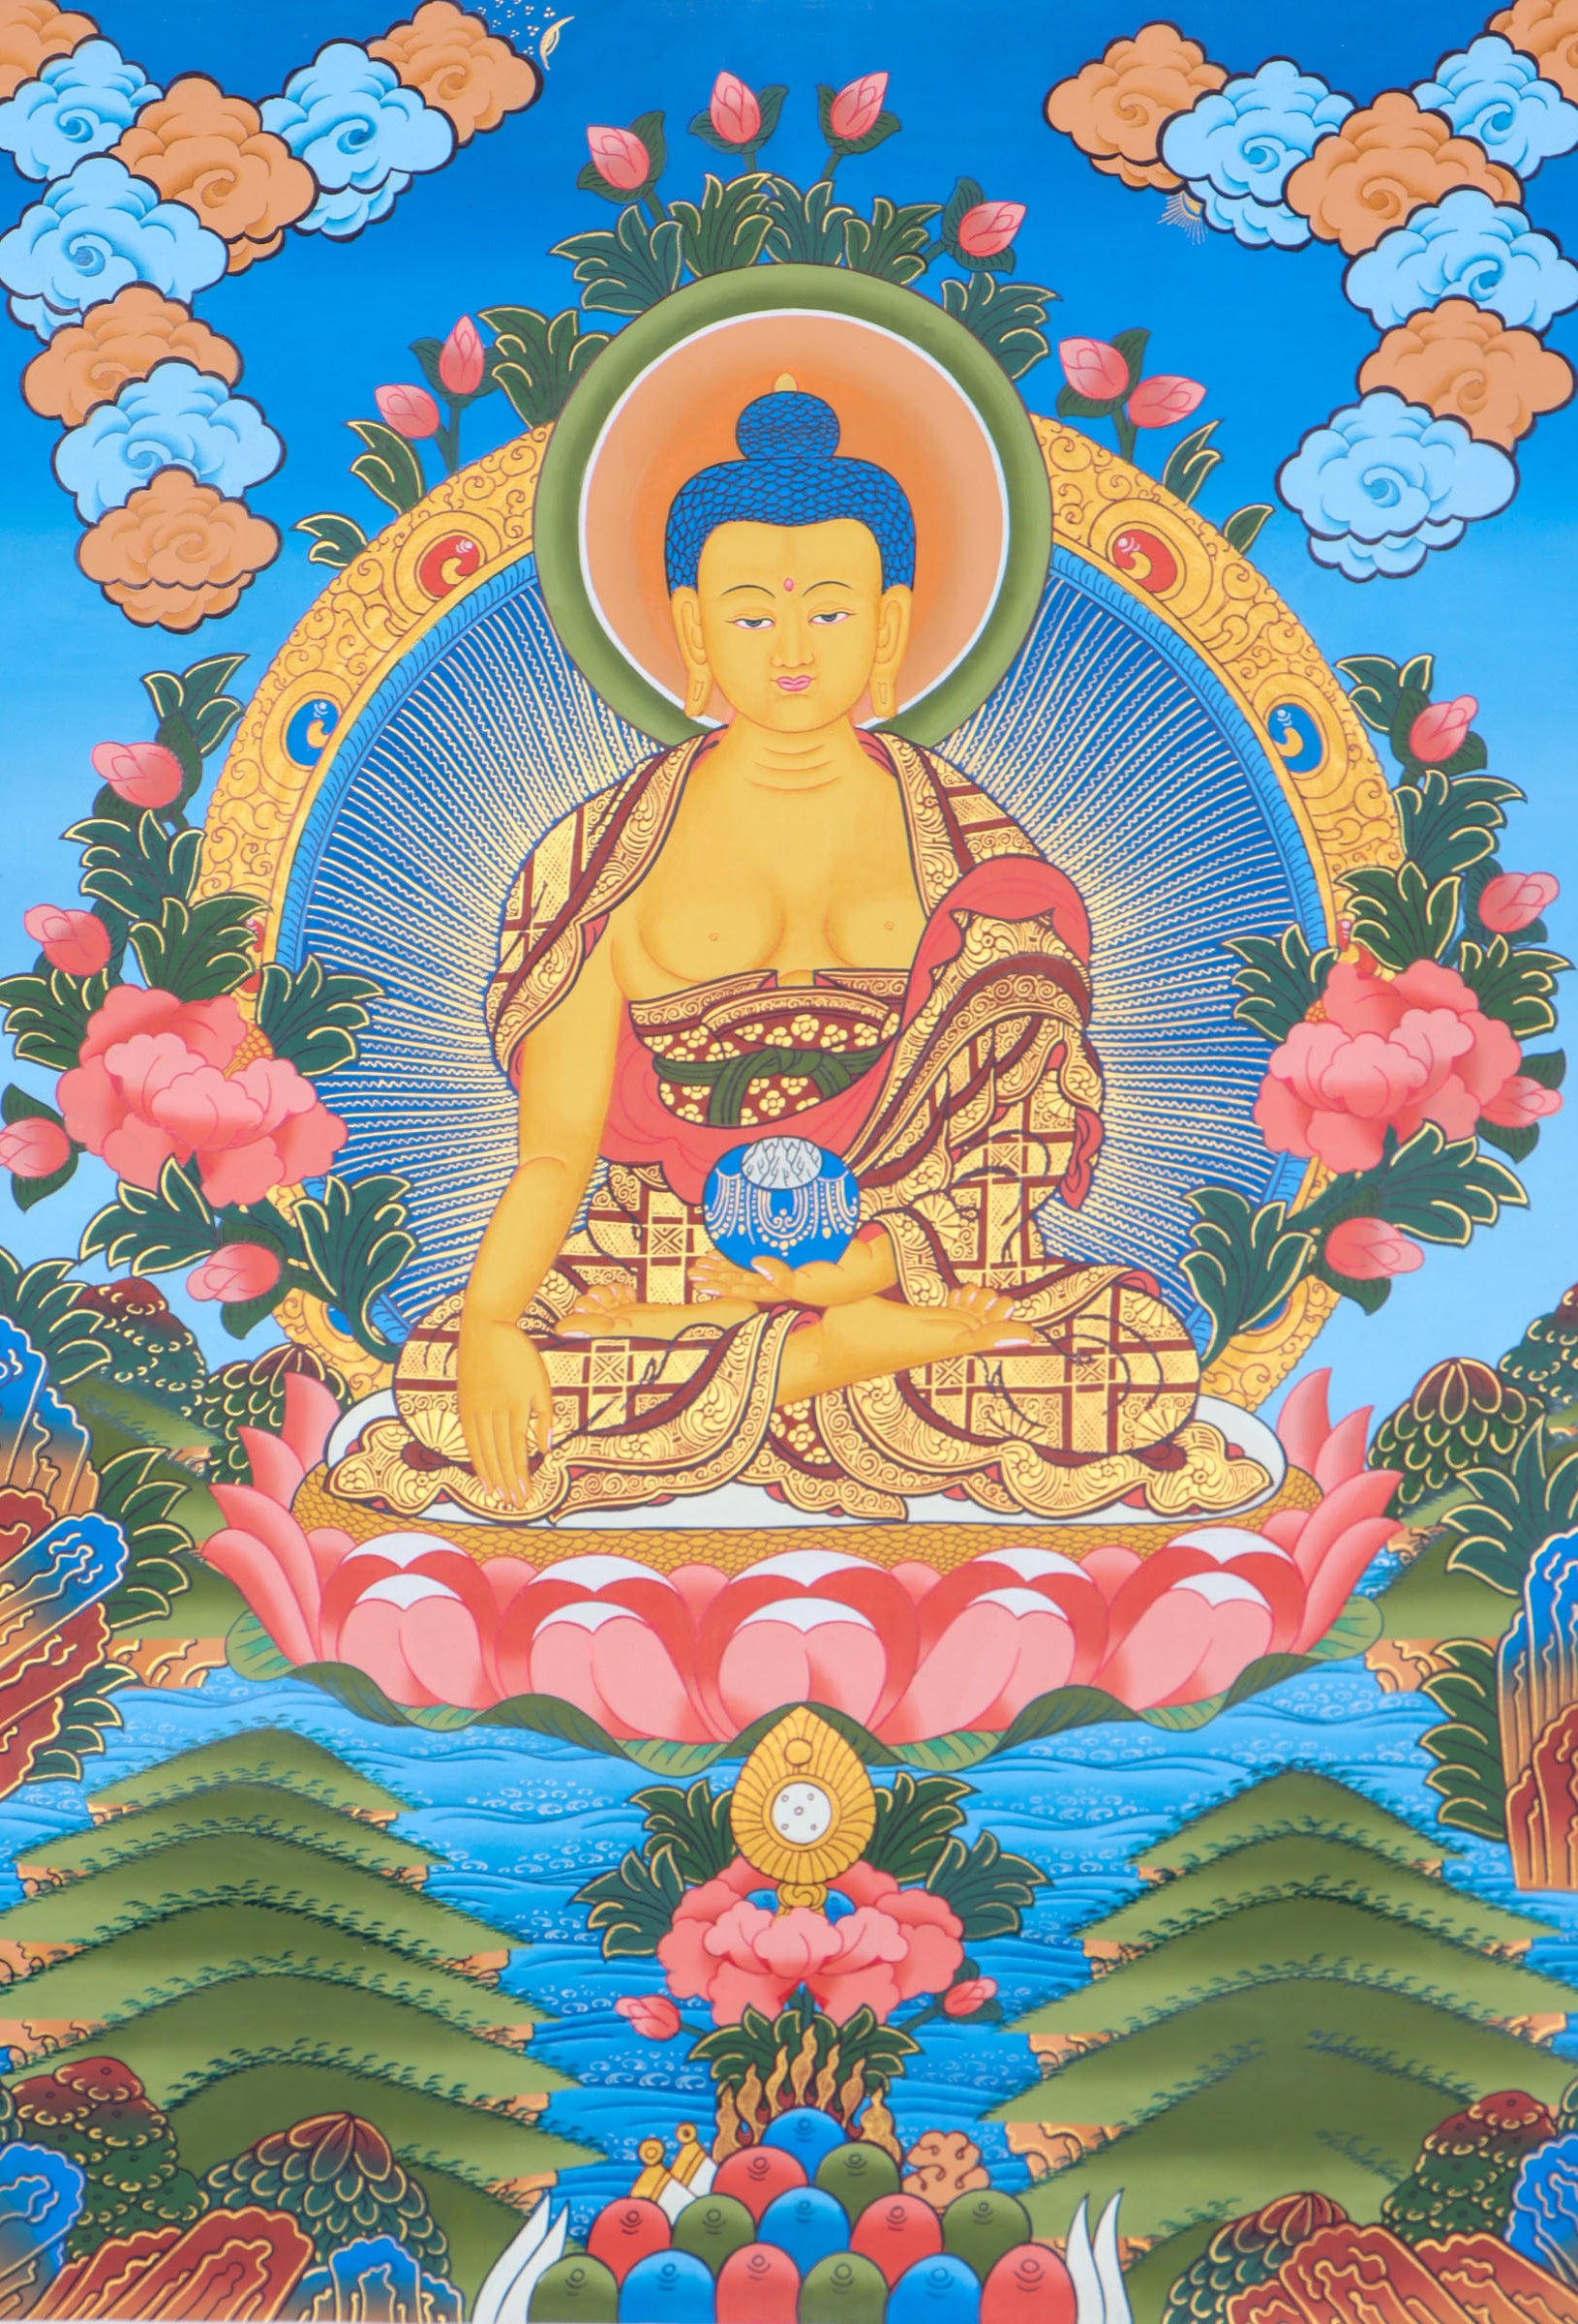 Shakyamuni Thangka for religious practices, ceremonies, and meditation.